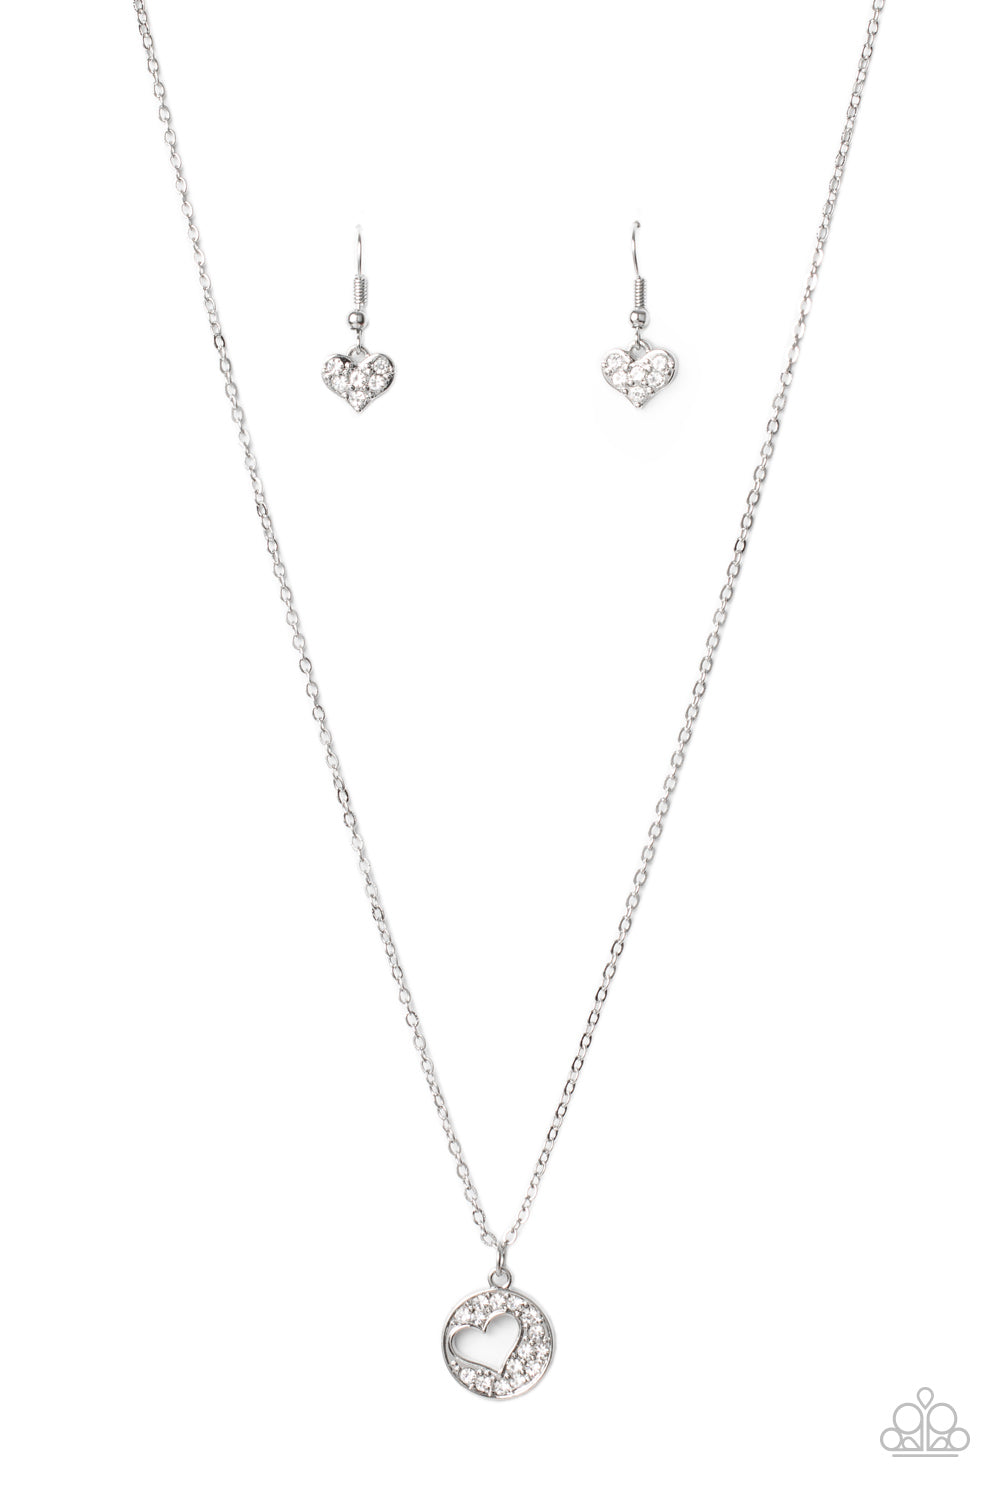 Bare Your Heart - White Necklace Set - Princess Glam Shop